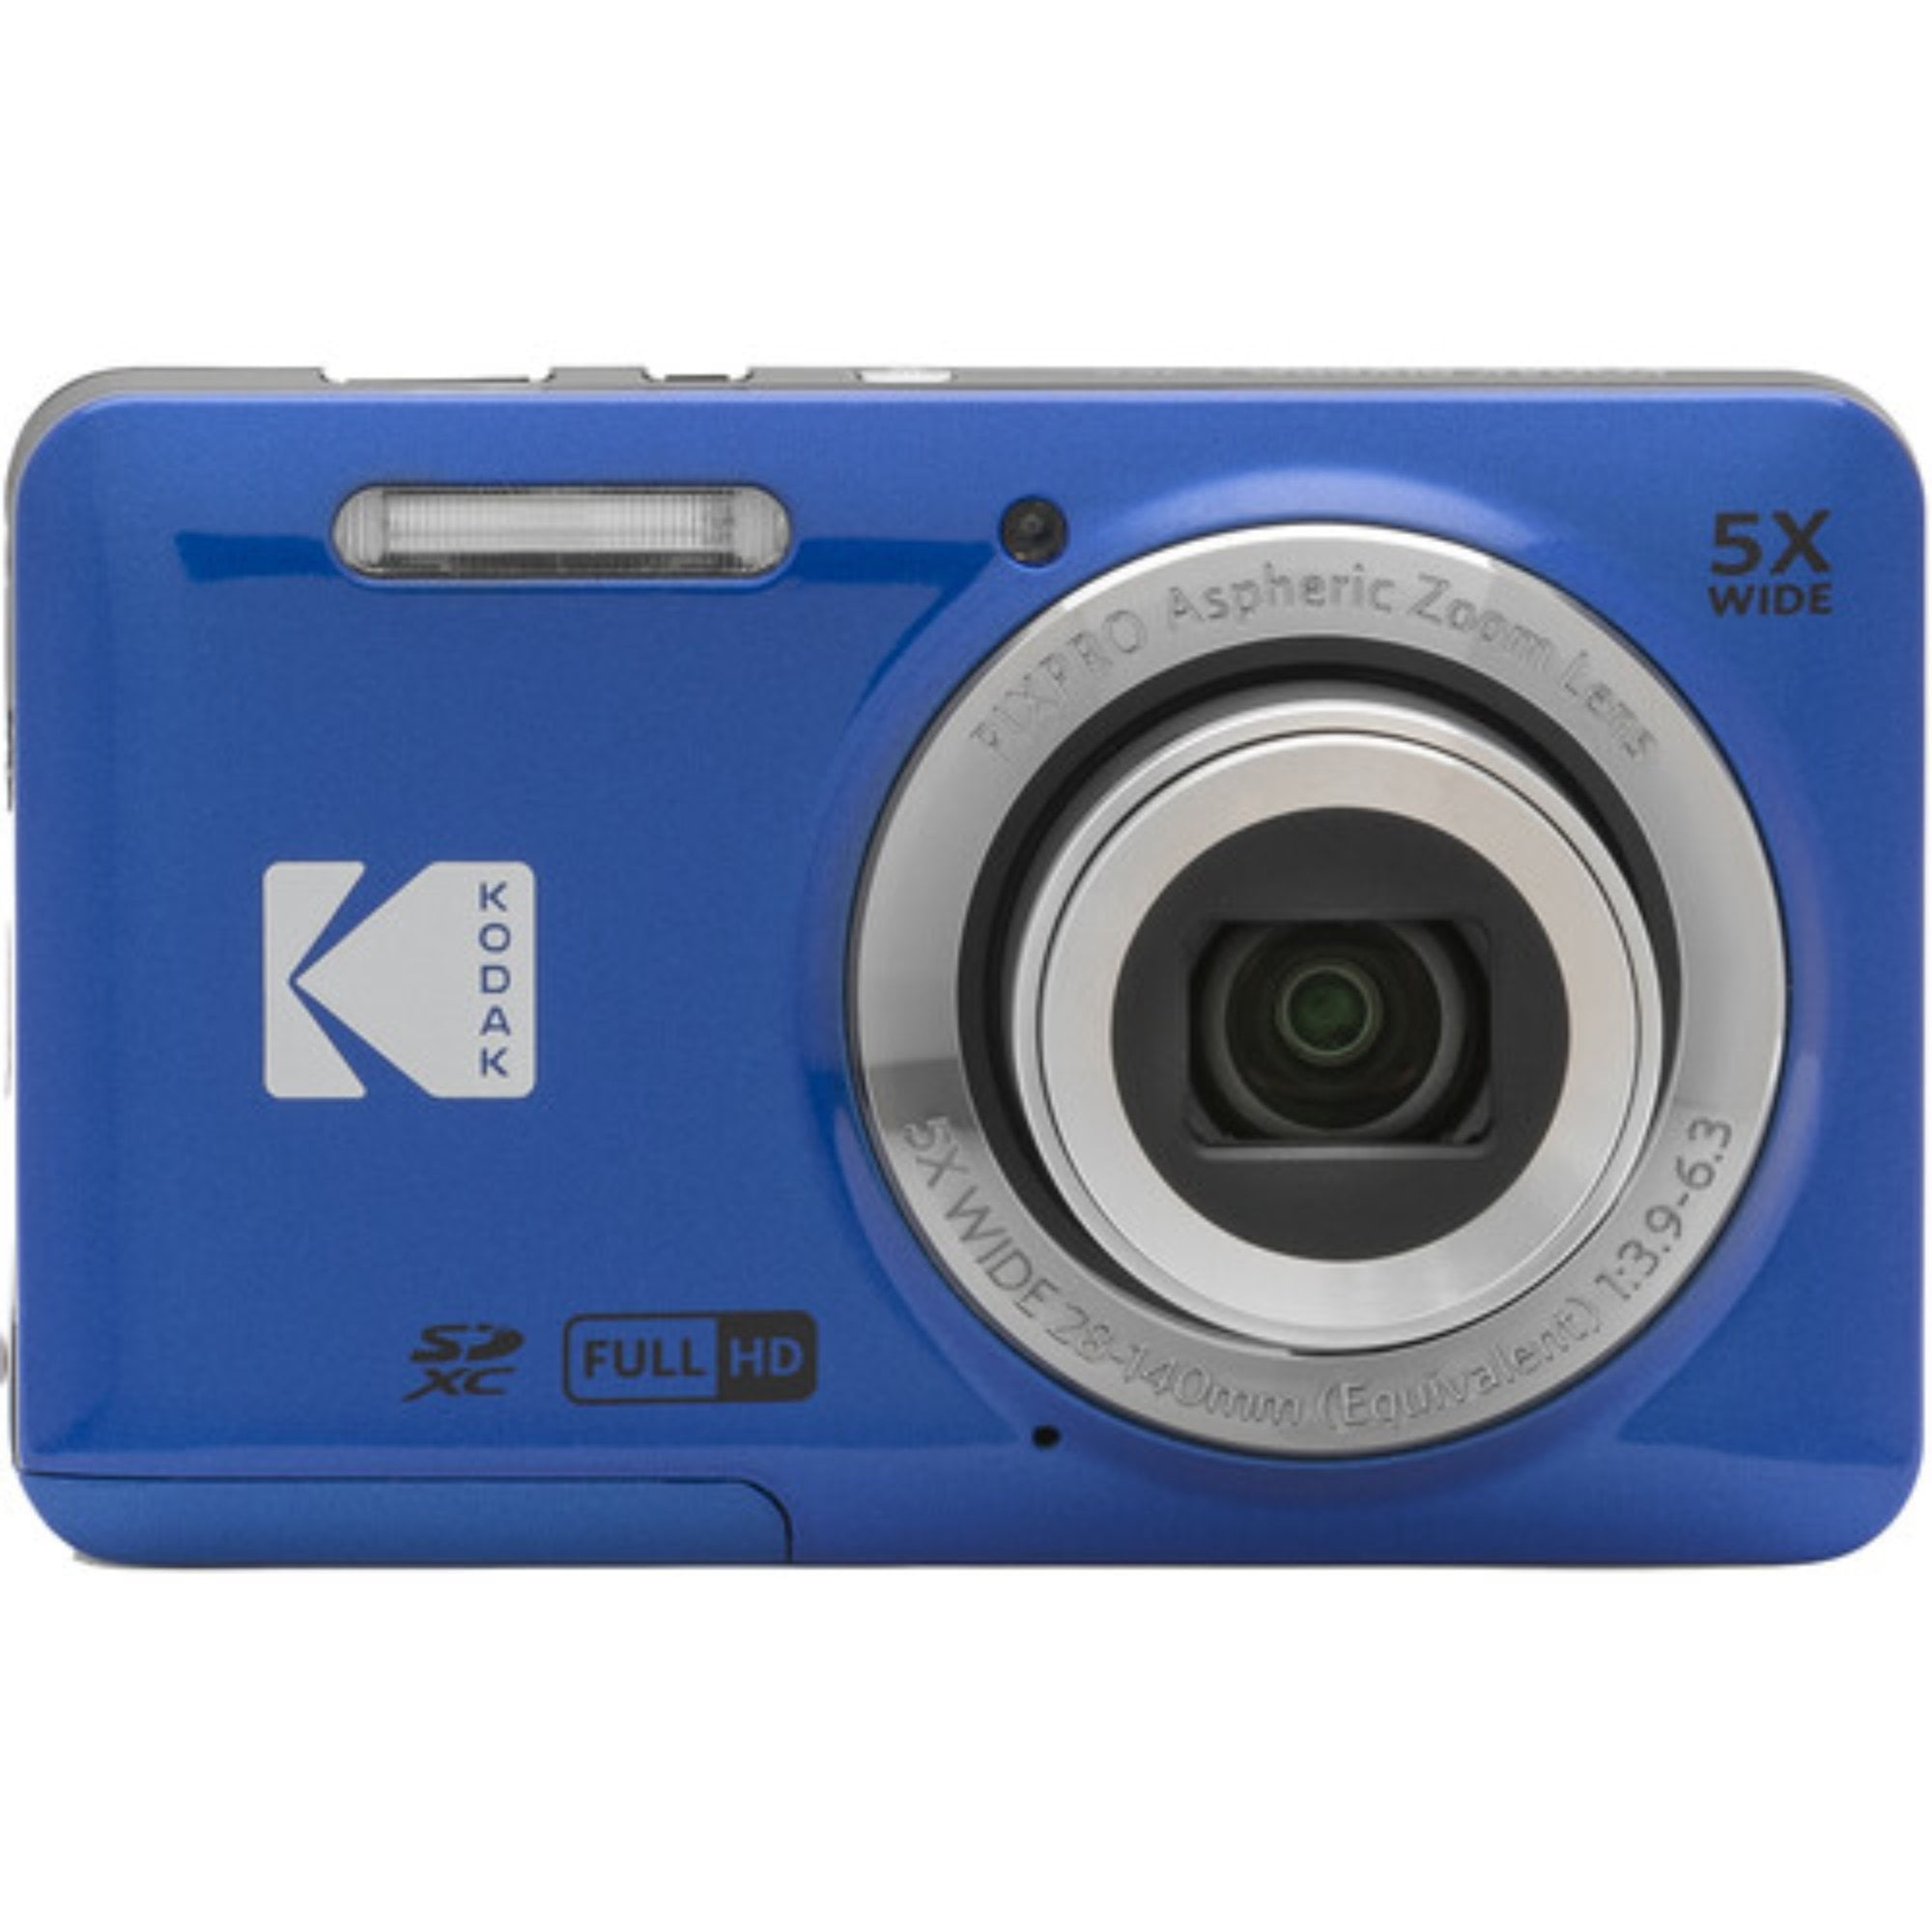 Buy Kodak PIXPRO Friendly Zoom FZ53 16 MP Digital Camera with